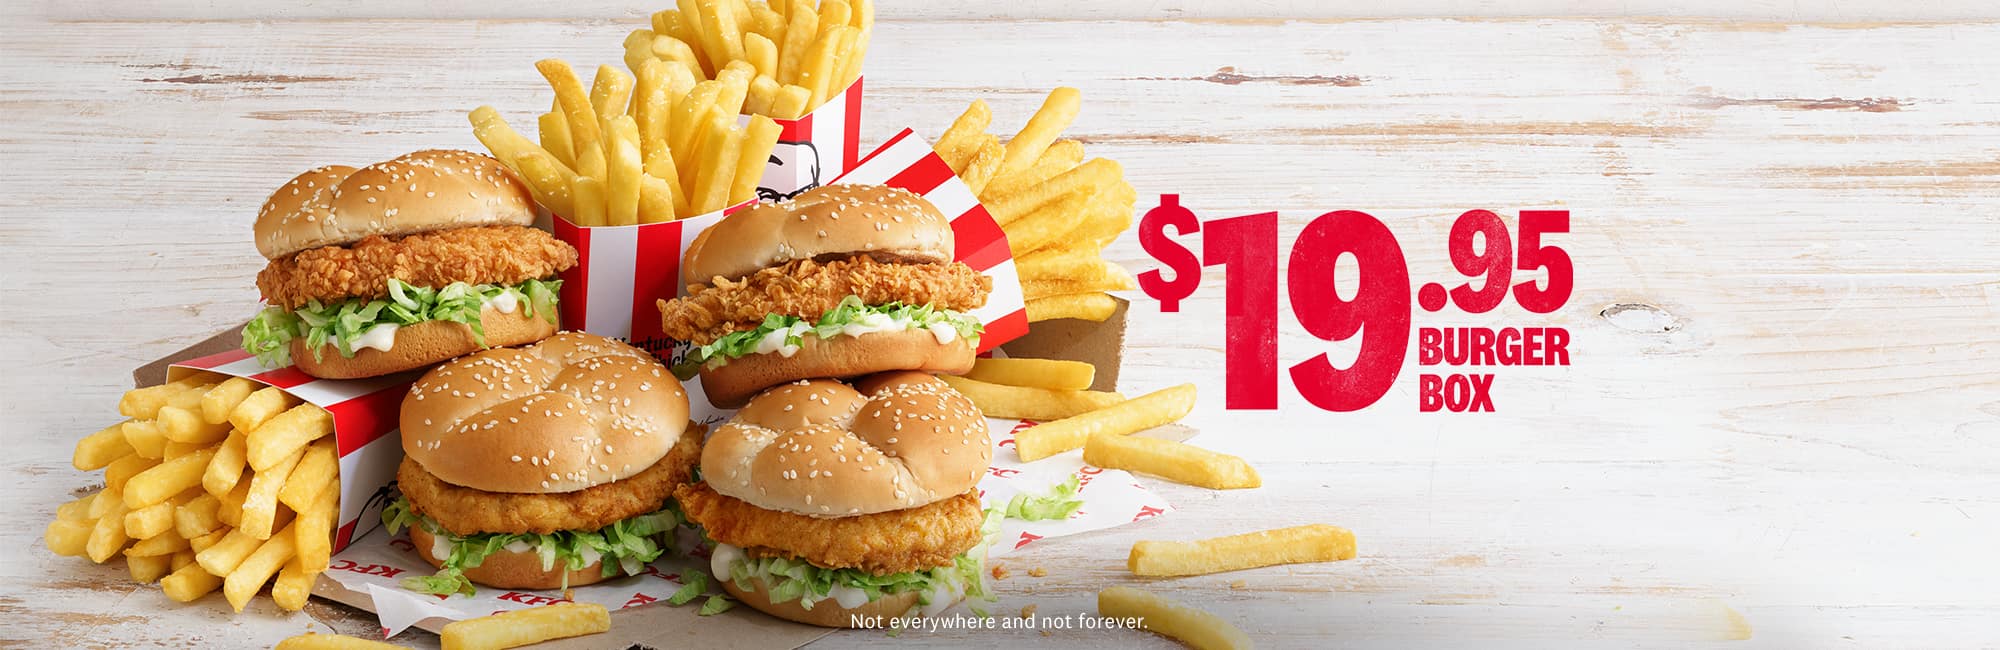 Get Value Burger Box for $19.95, Fill up original recipe box for $4.95 at KFC